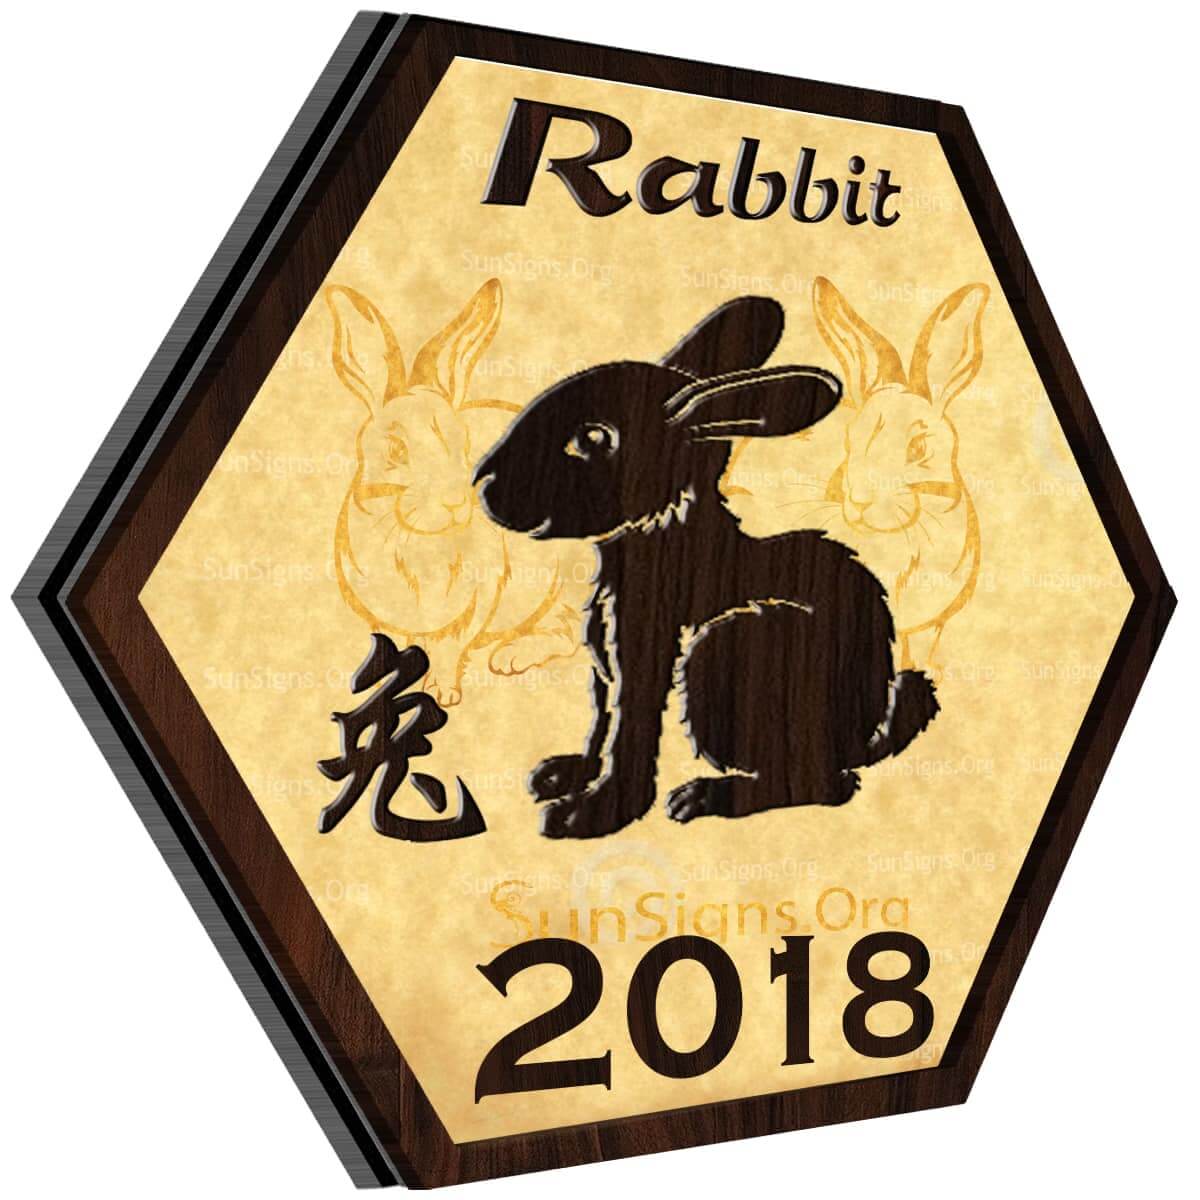 Rabbit Horoscope 2018 Predictions For Love, Finance, Career, Health And Family